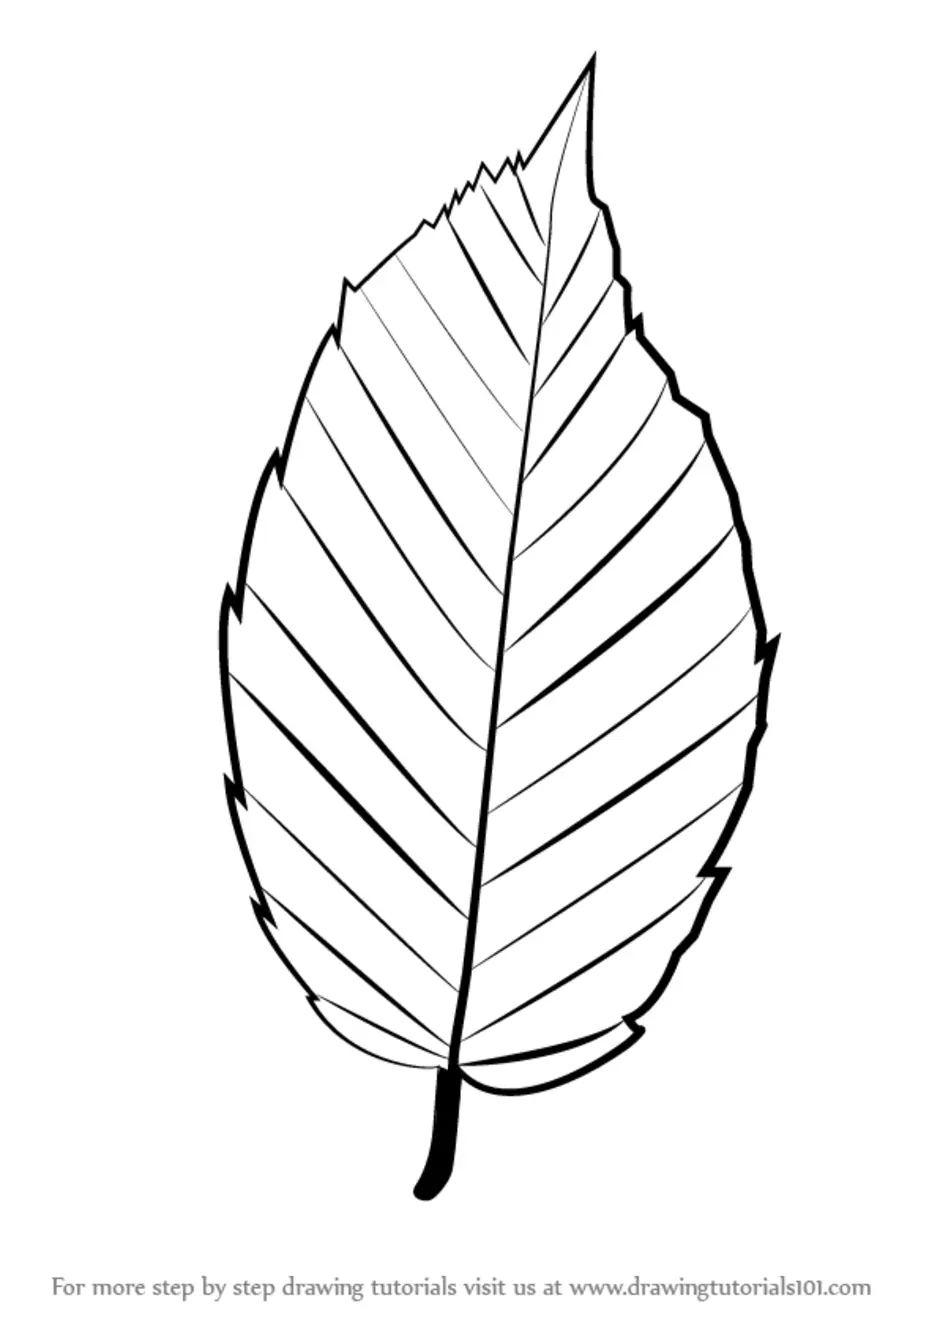 Картинка лист карандашом. Рисунки листьев. Листочки деревьев. Листья карандашом. Рисование листьями деревьев.